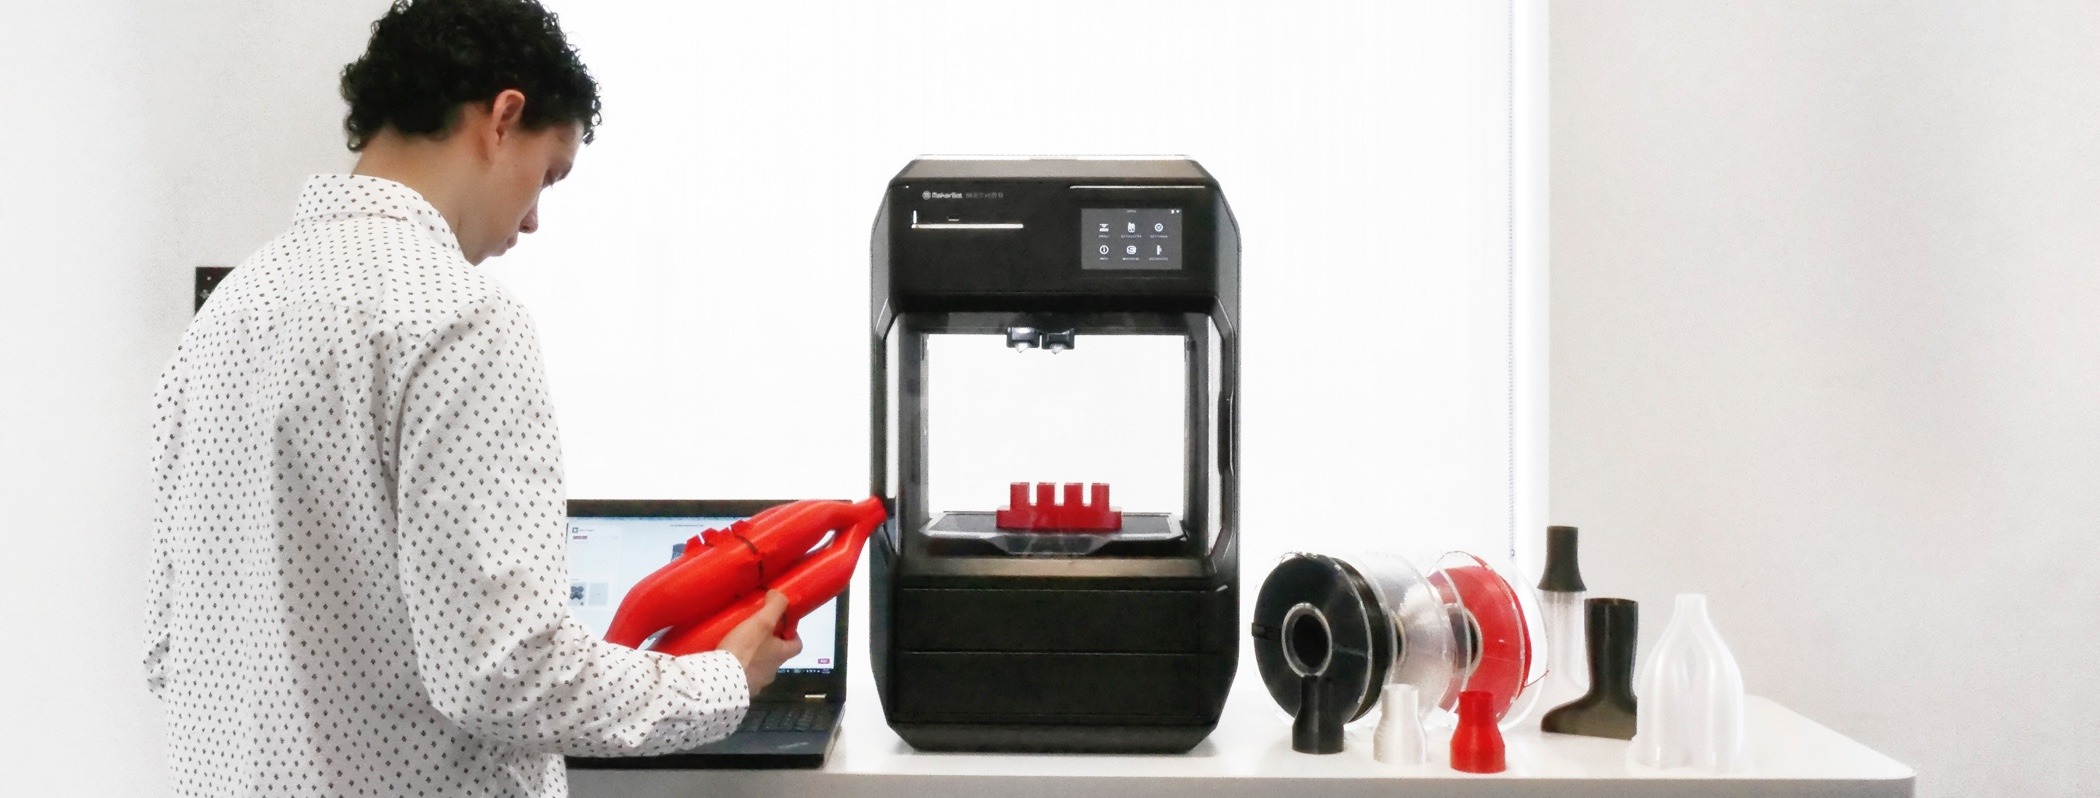 MakerBot Method PETG Specialty Material